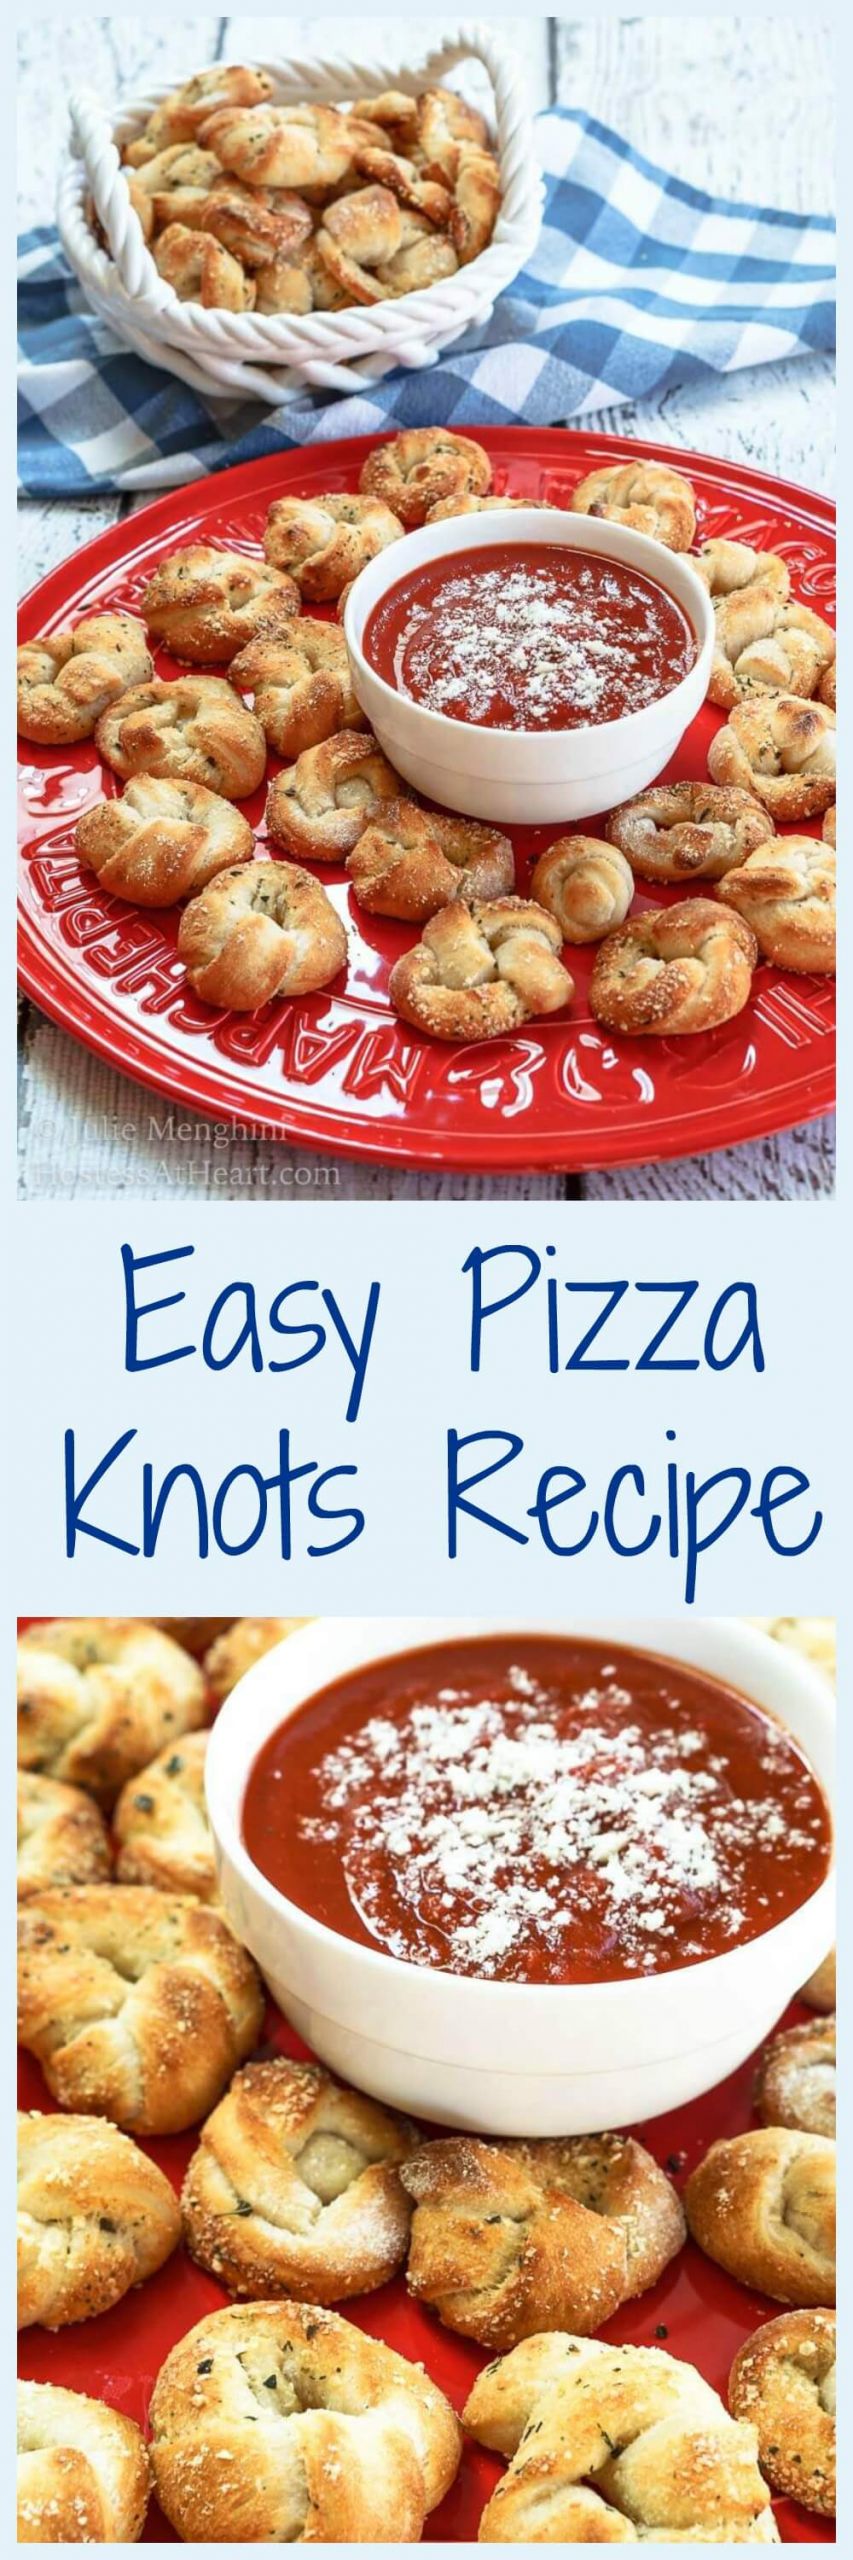 Easy Italian Appetizers Finger Foods
 Easy Pizza Knots Recipe Video